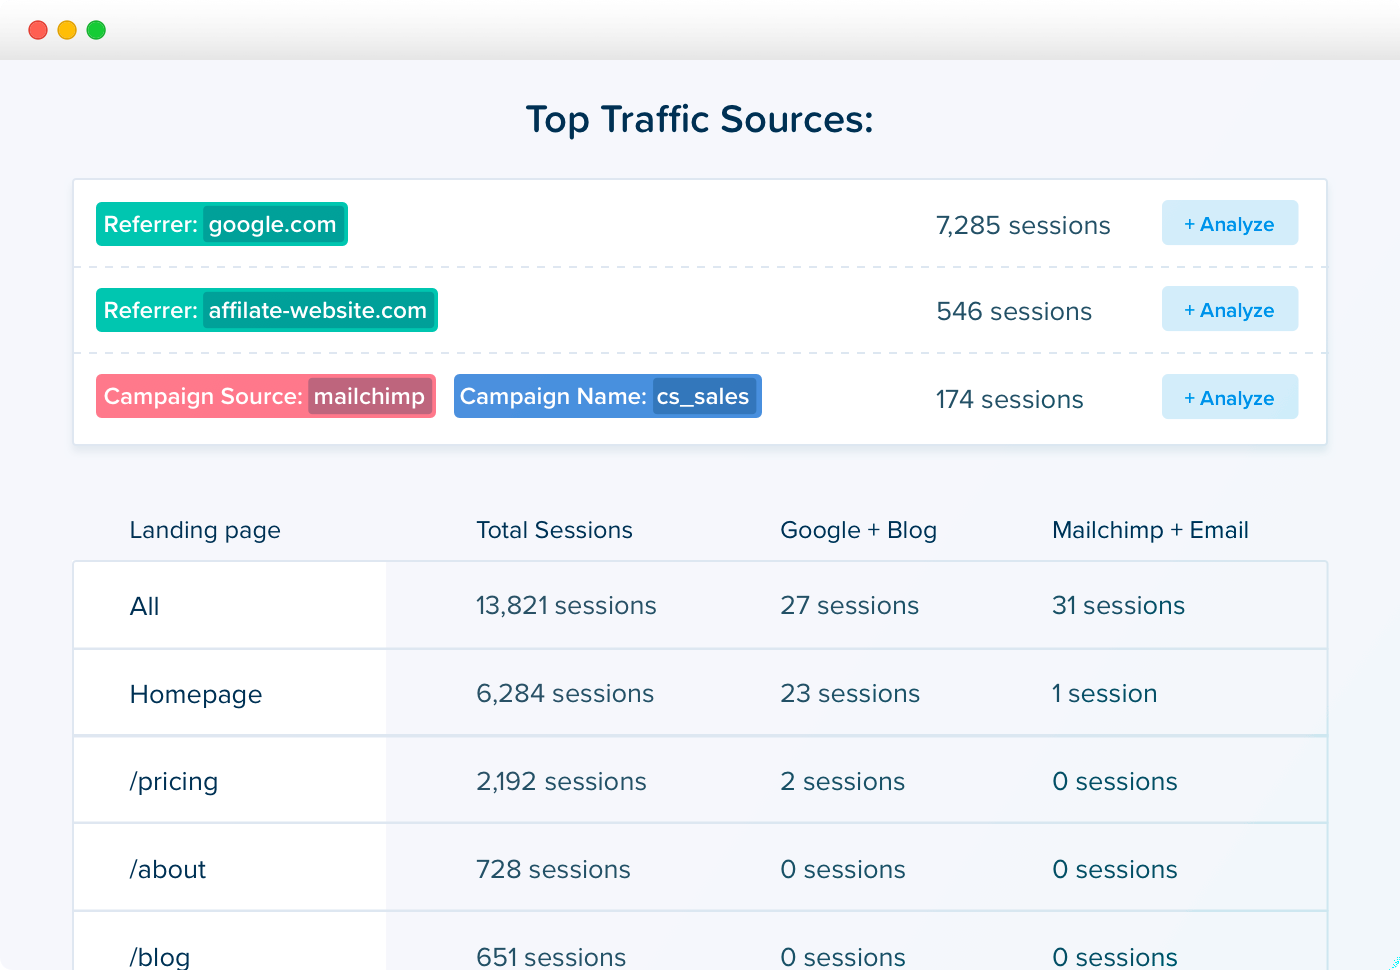 The Crazy Egg web analytics tool provides valuable data on website traffic